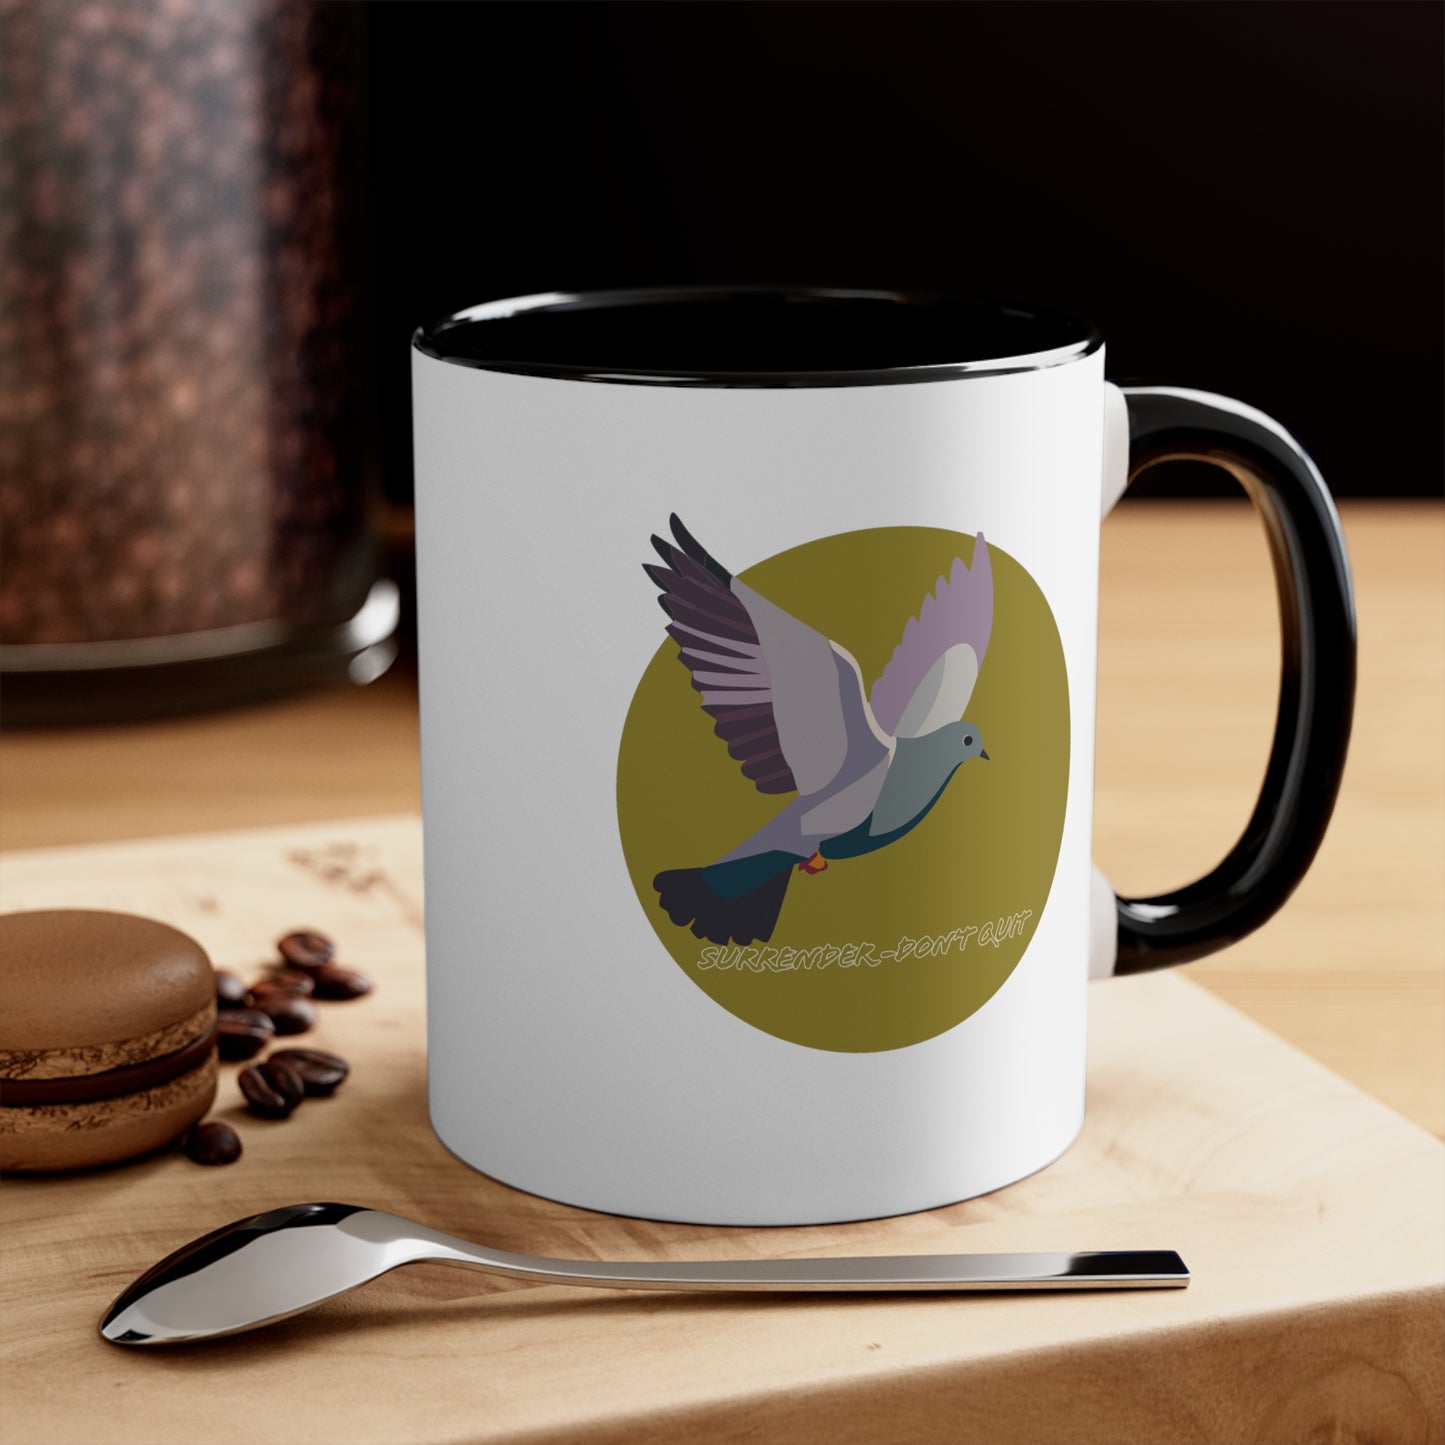 Surrender-Don't Quit Accent Coffee Mug, 11oz